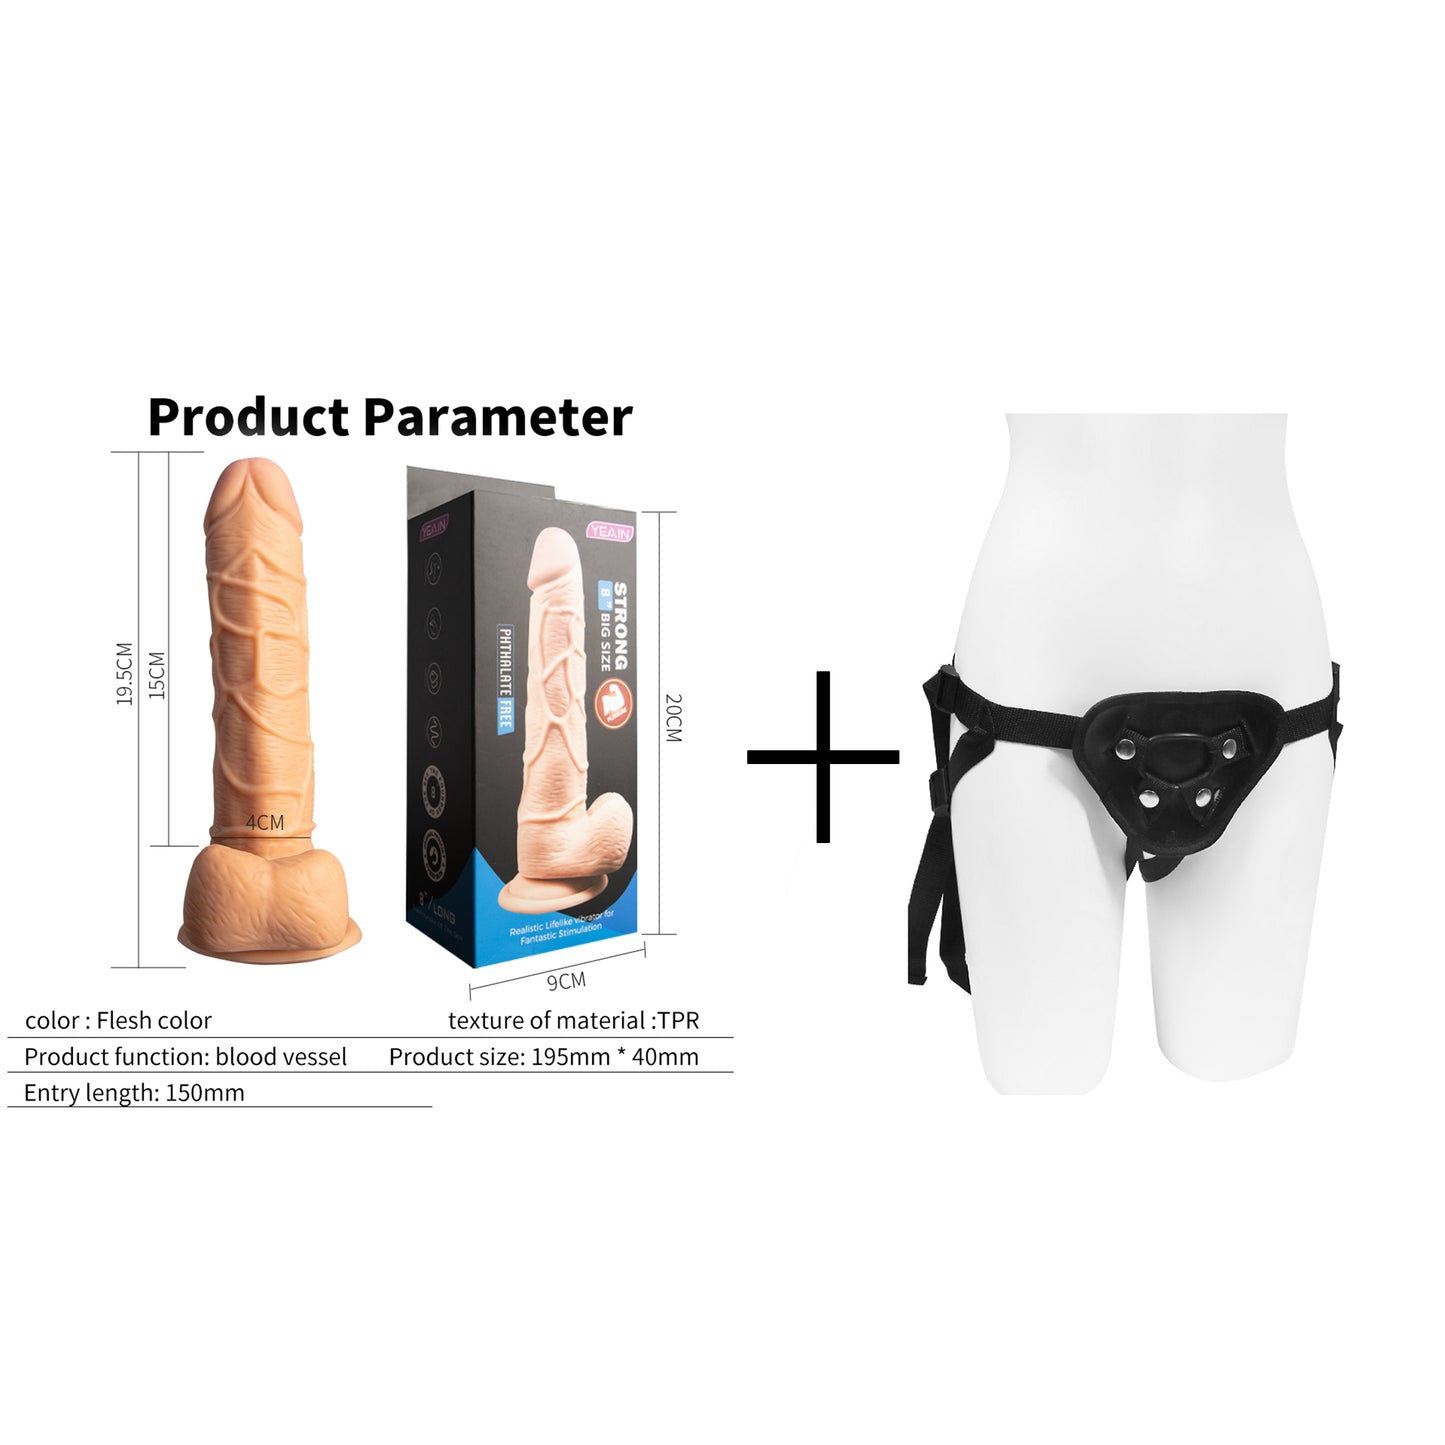 Flexible Ultra Realitic Silicone Dildo Fleshlight Penis Toy